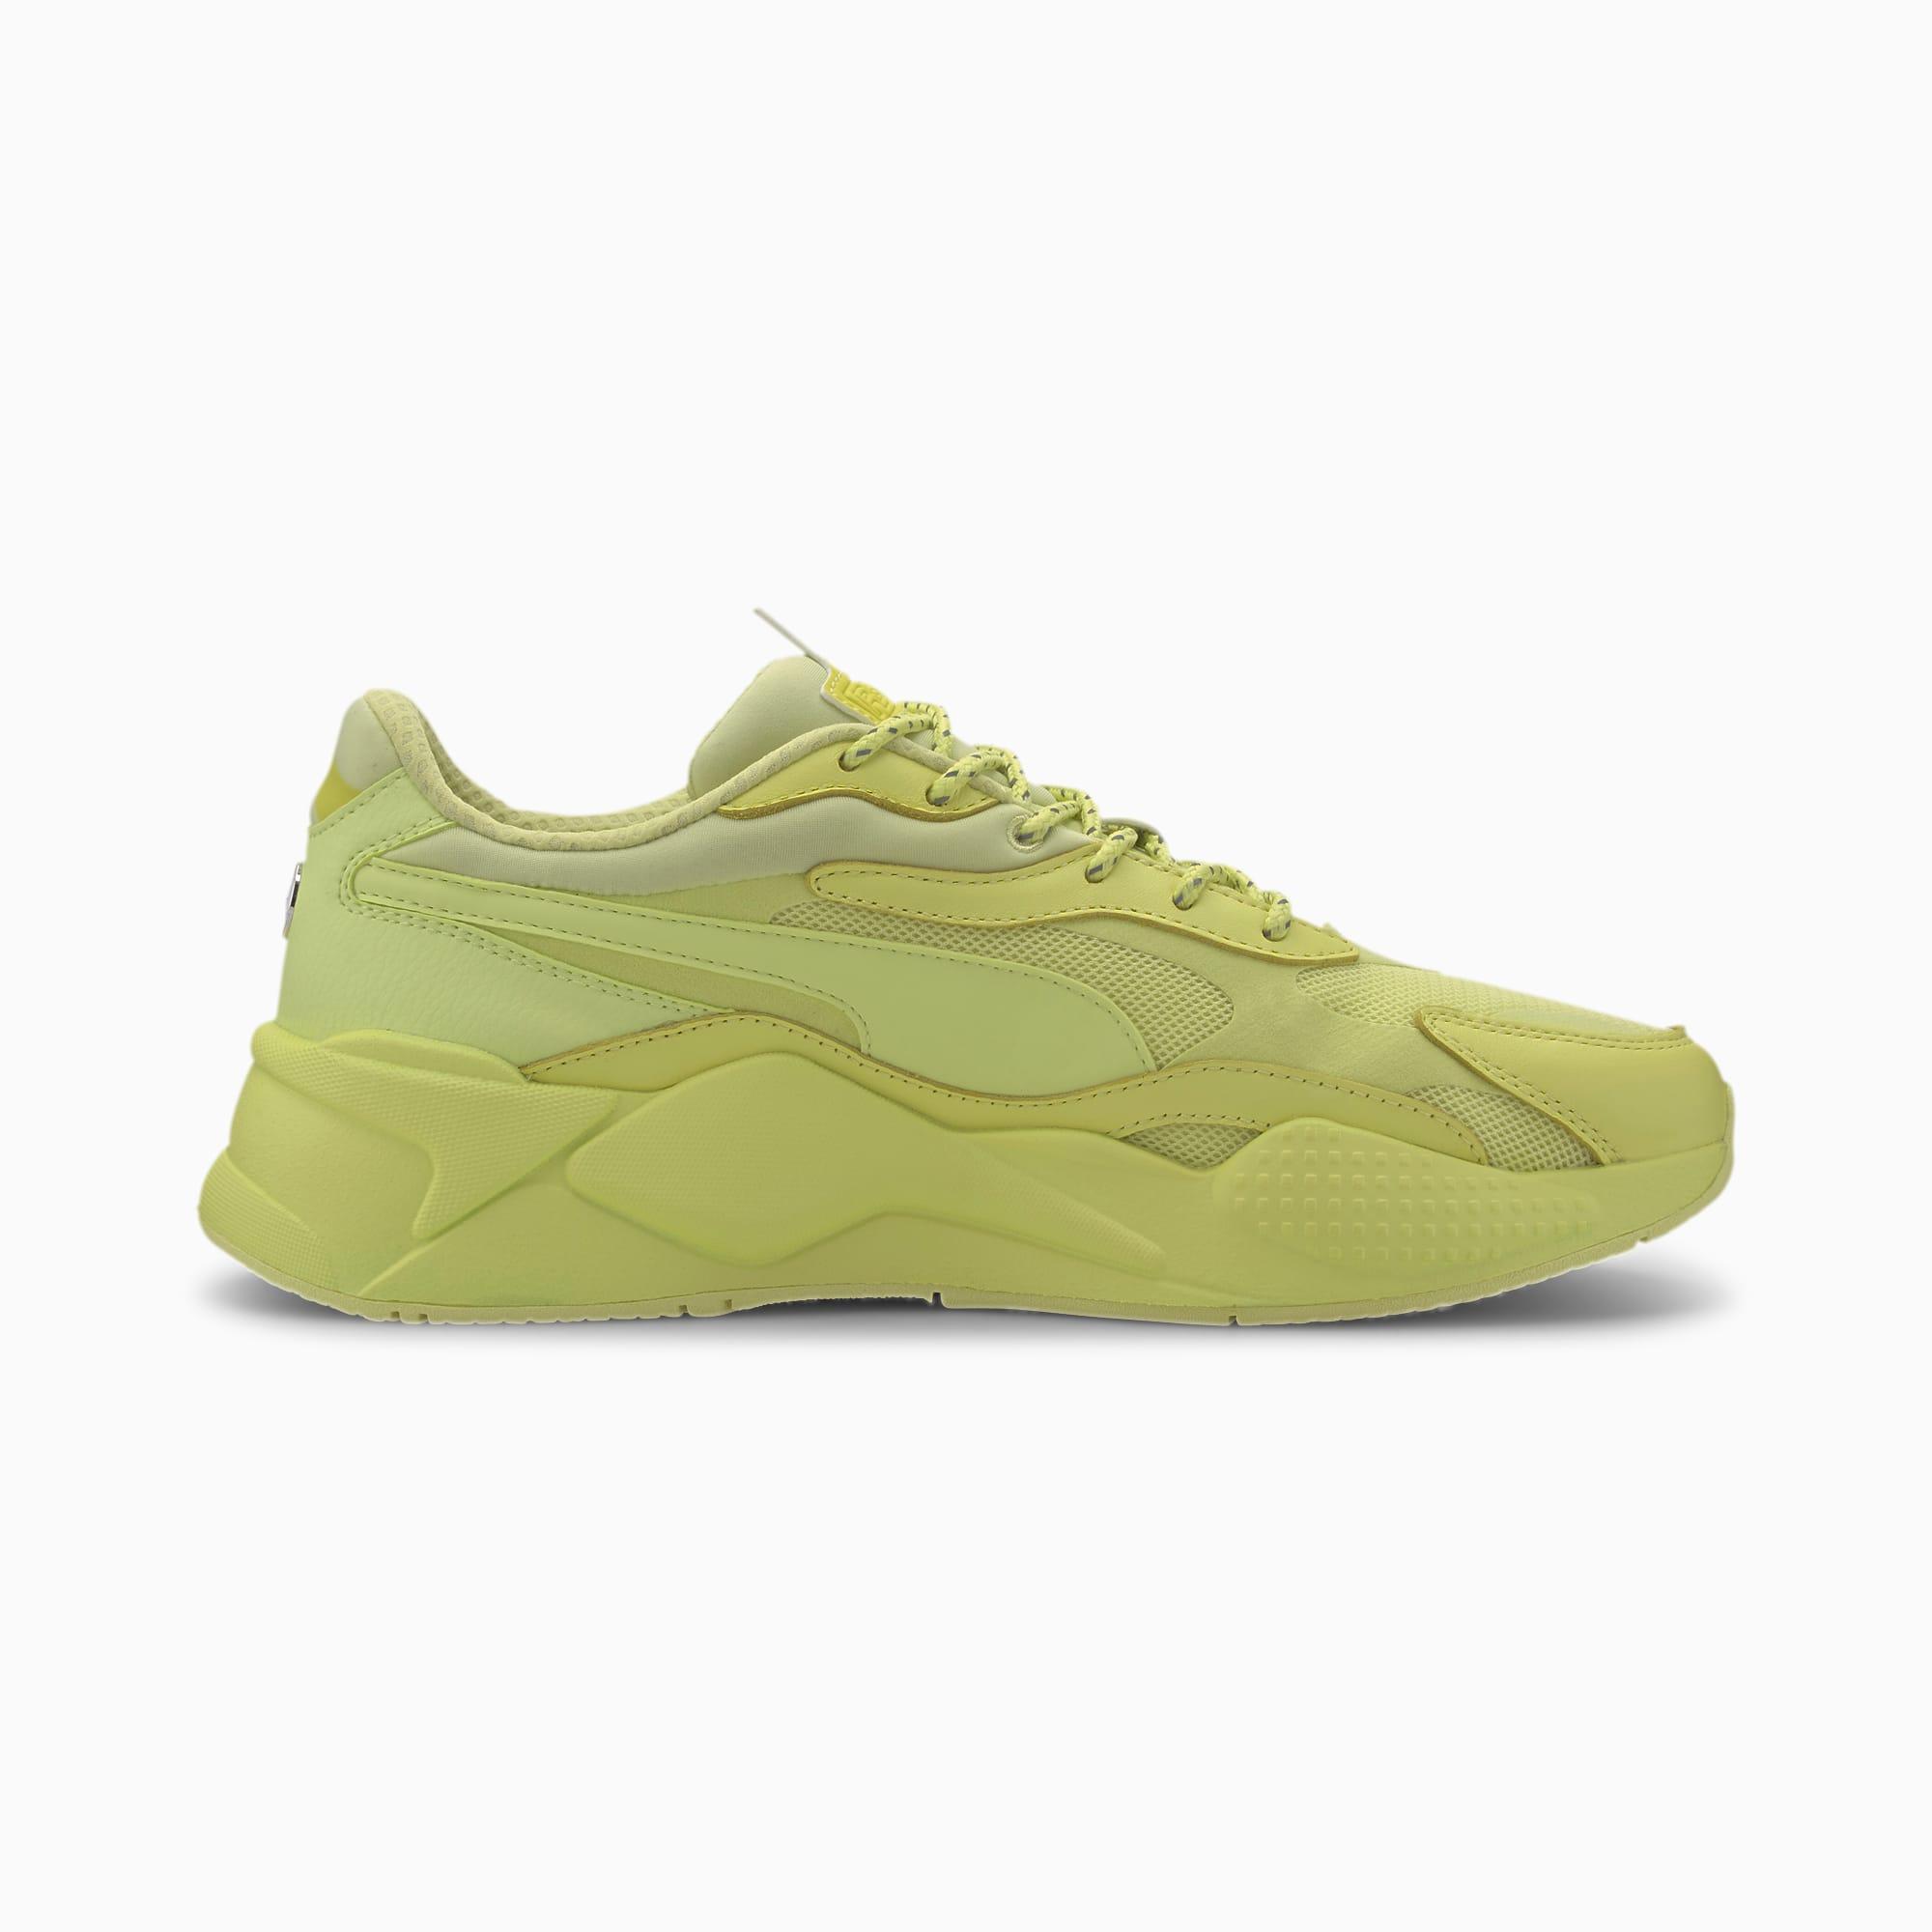 puma neon green shoes